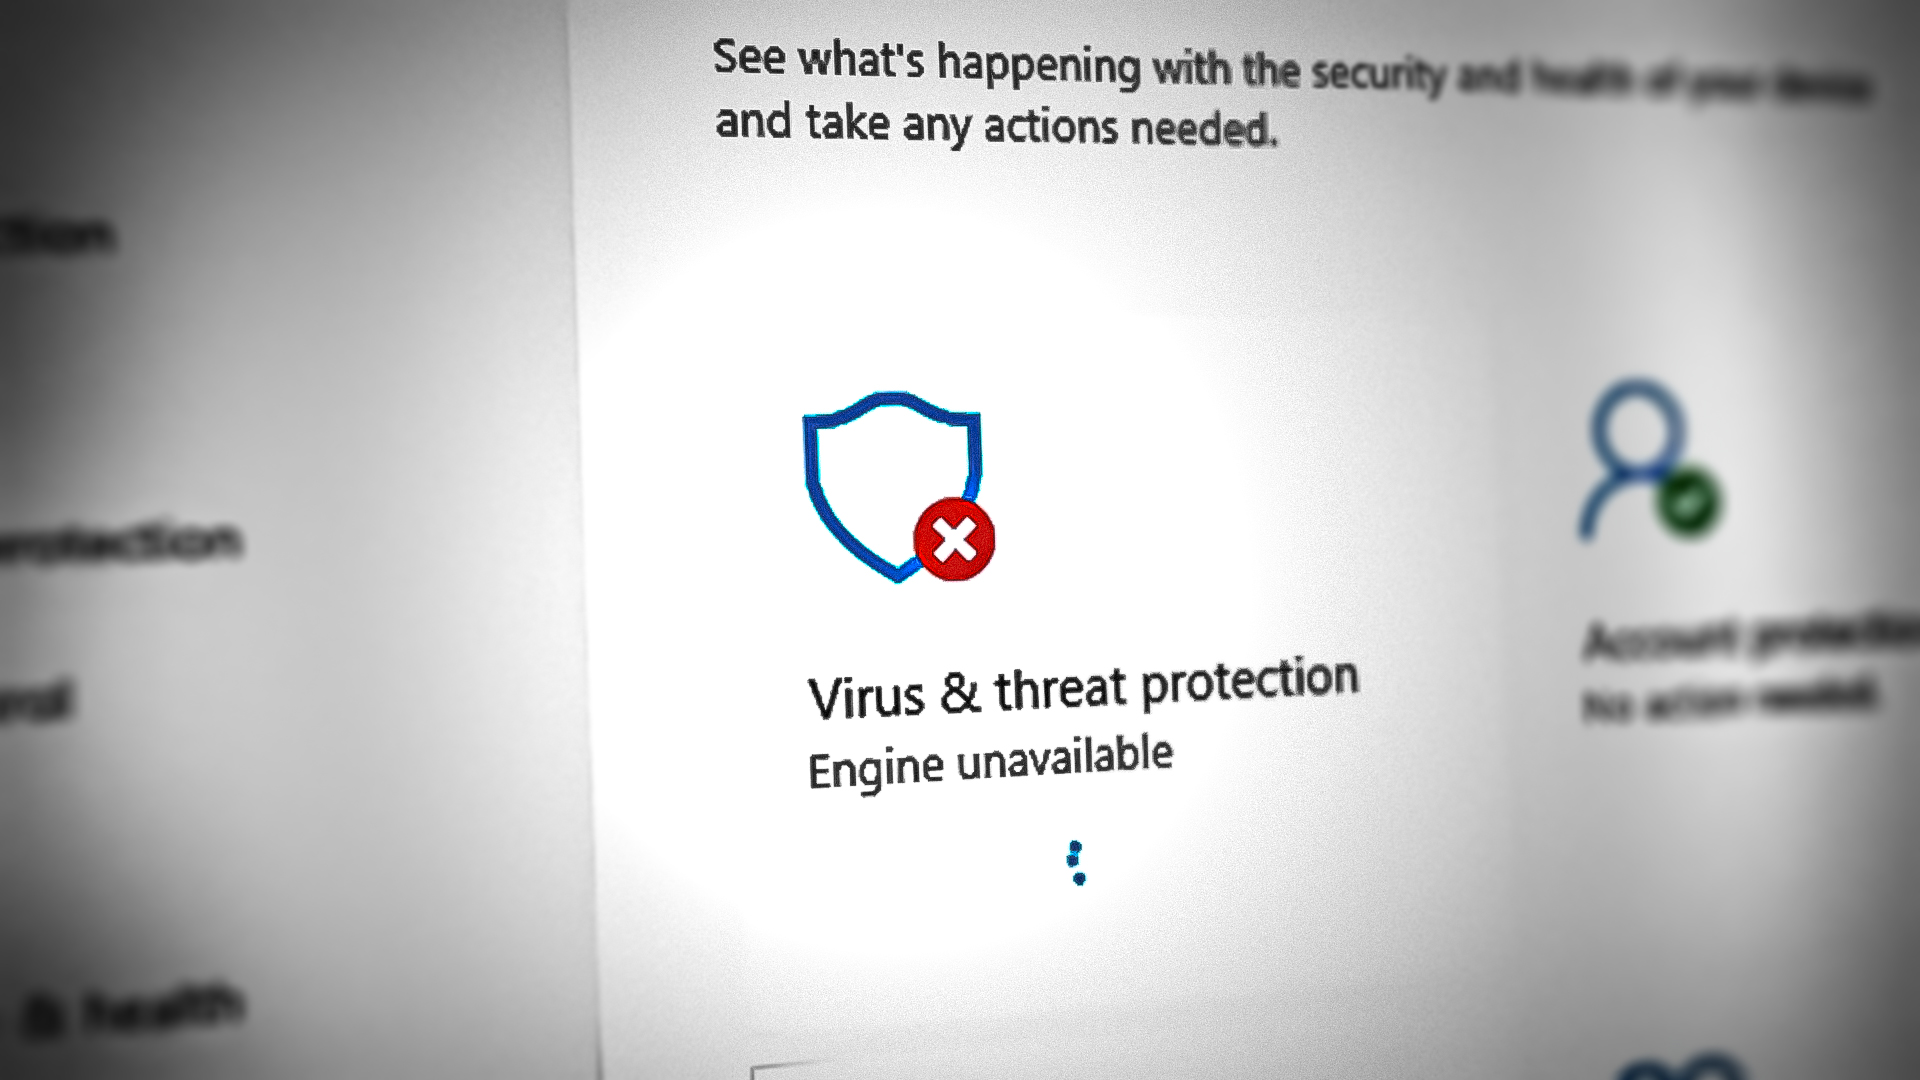 Windows Defender Antivirus Engine Unavailable